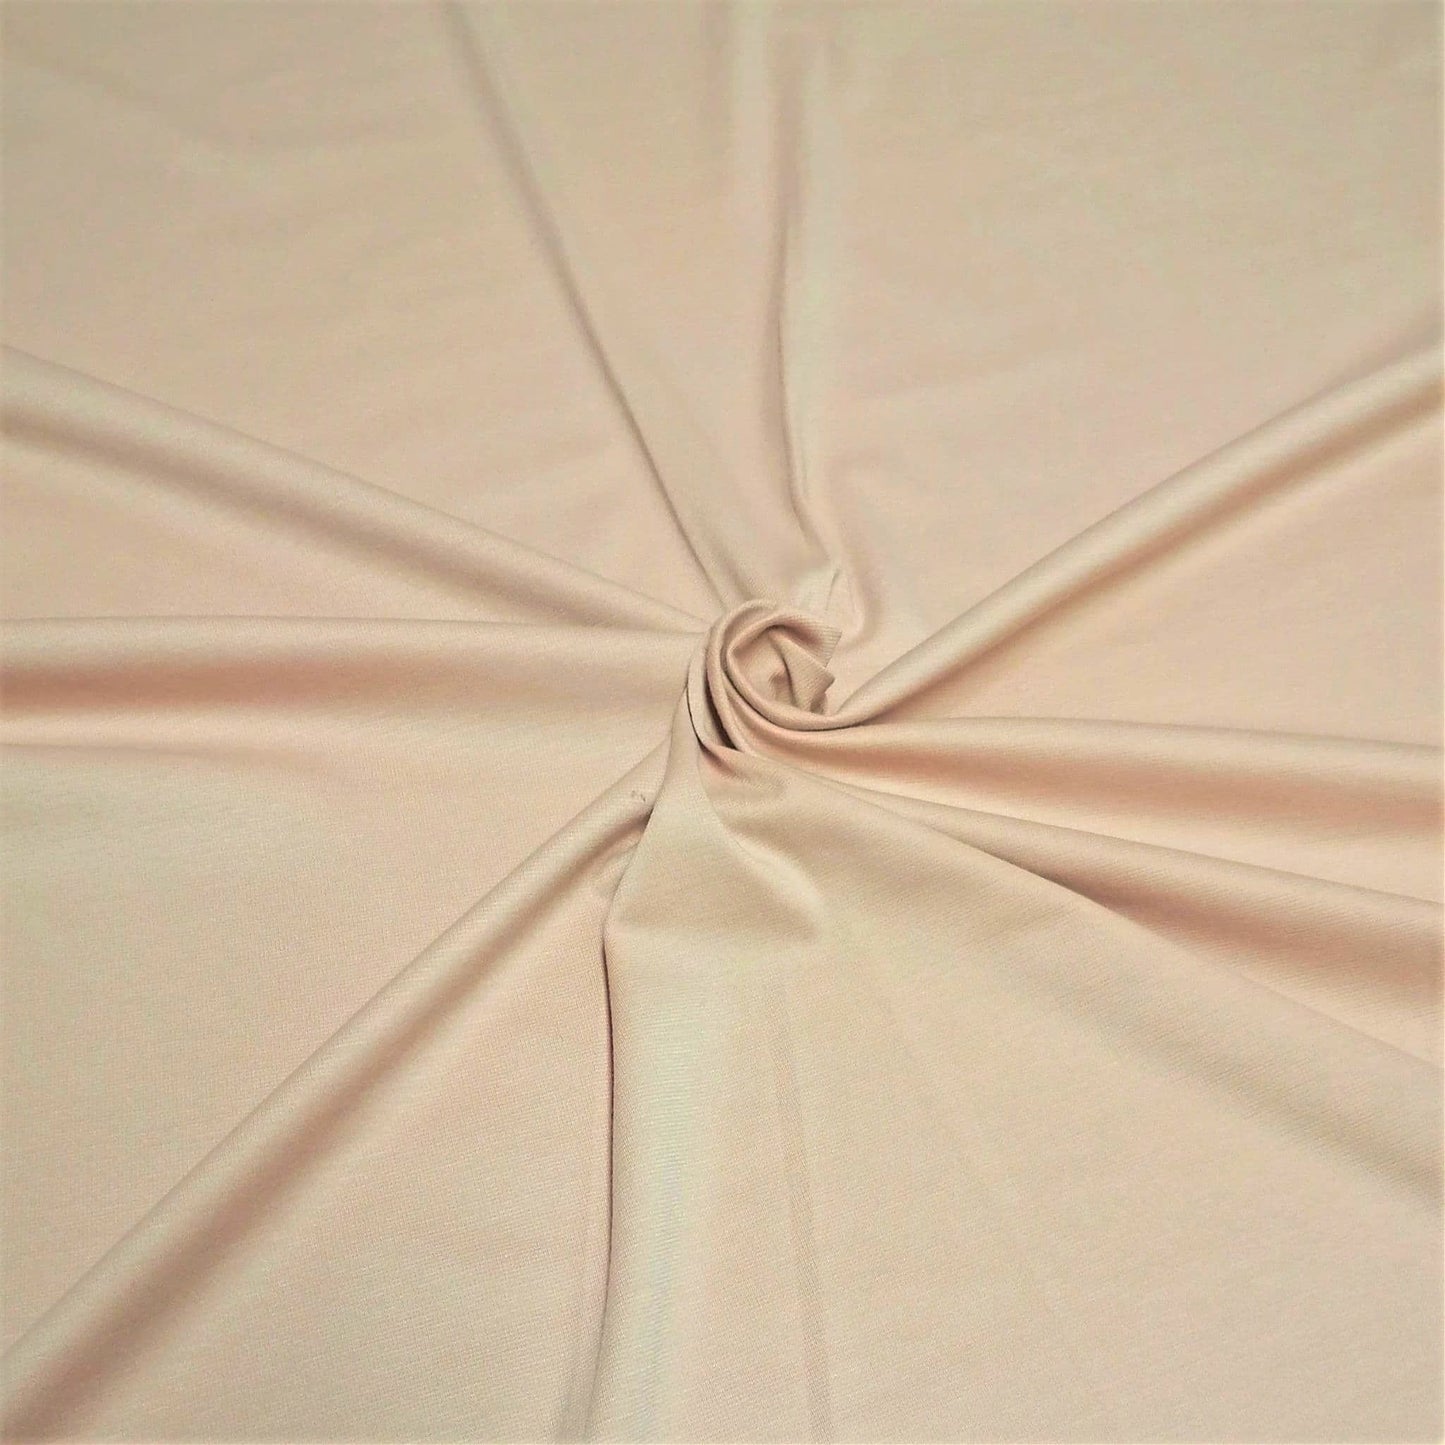 Ponte Roma - Cream 60% Wide Jersey Fabric